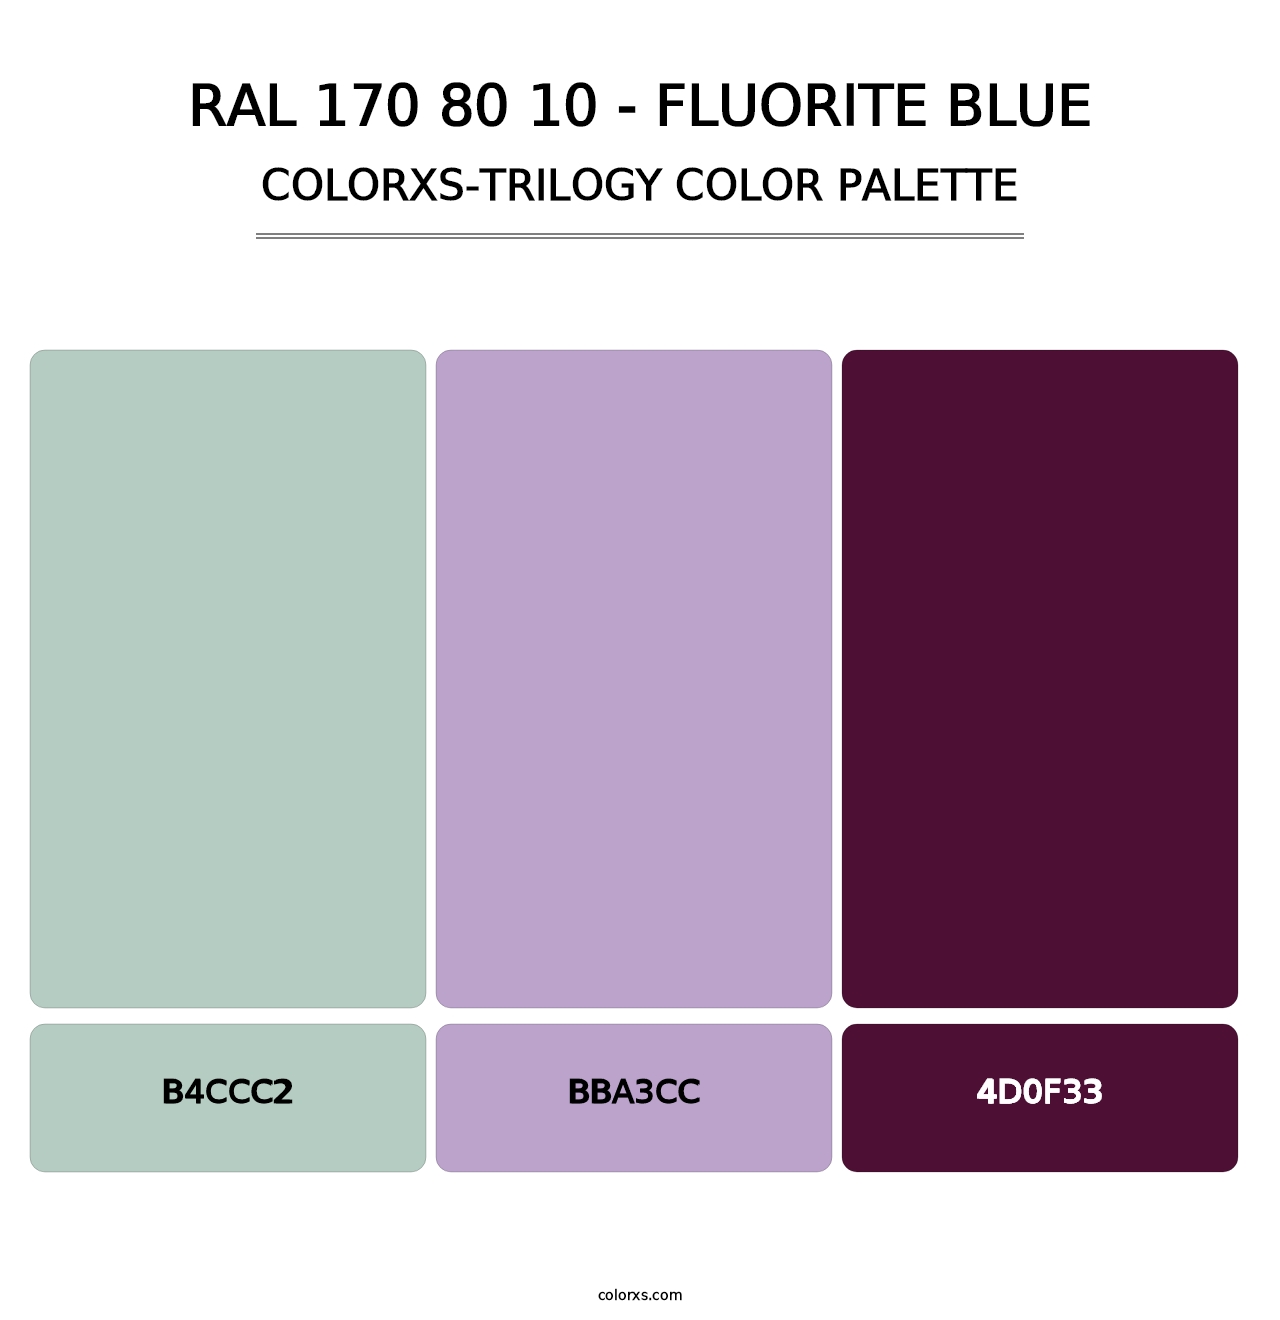 RAL 170 80 10 - Fluorite Blue - Colorxs Trilogy Palette